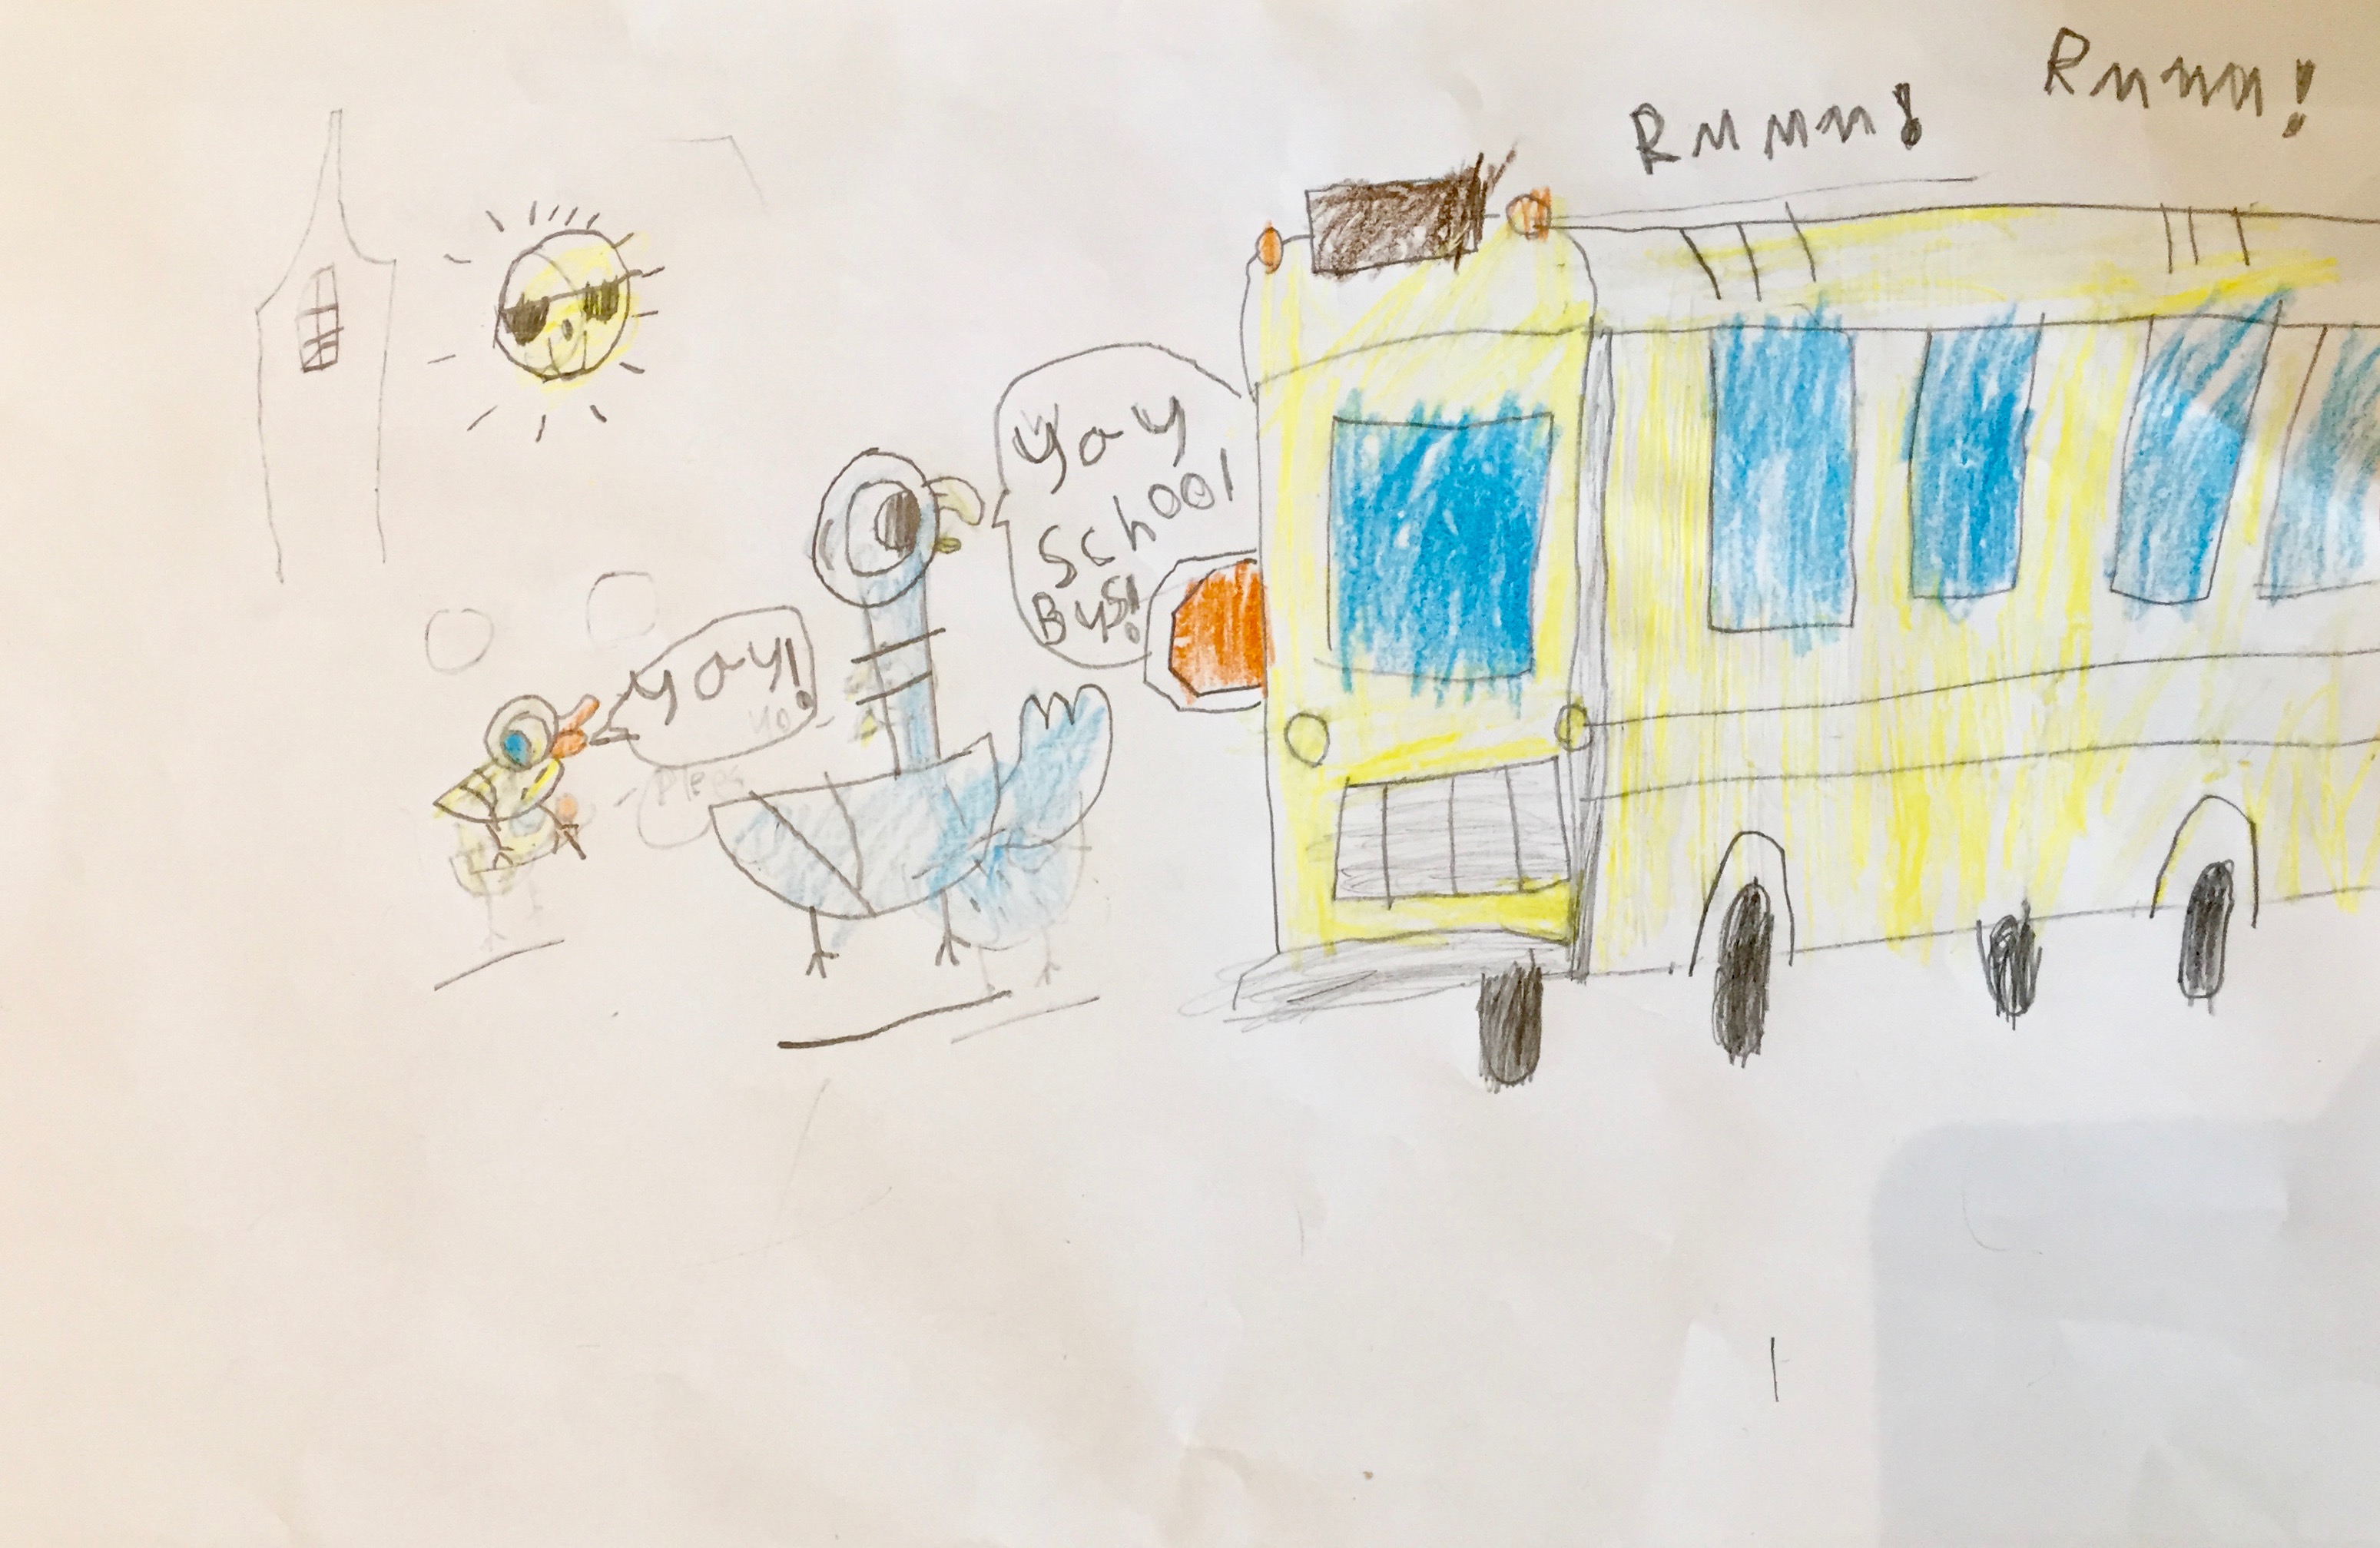 'The School Bus' by Sam (7) from Dublin